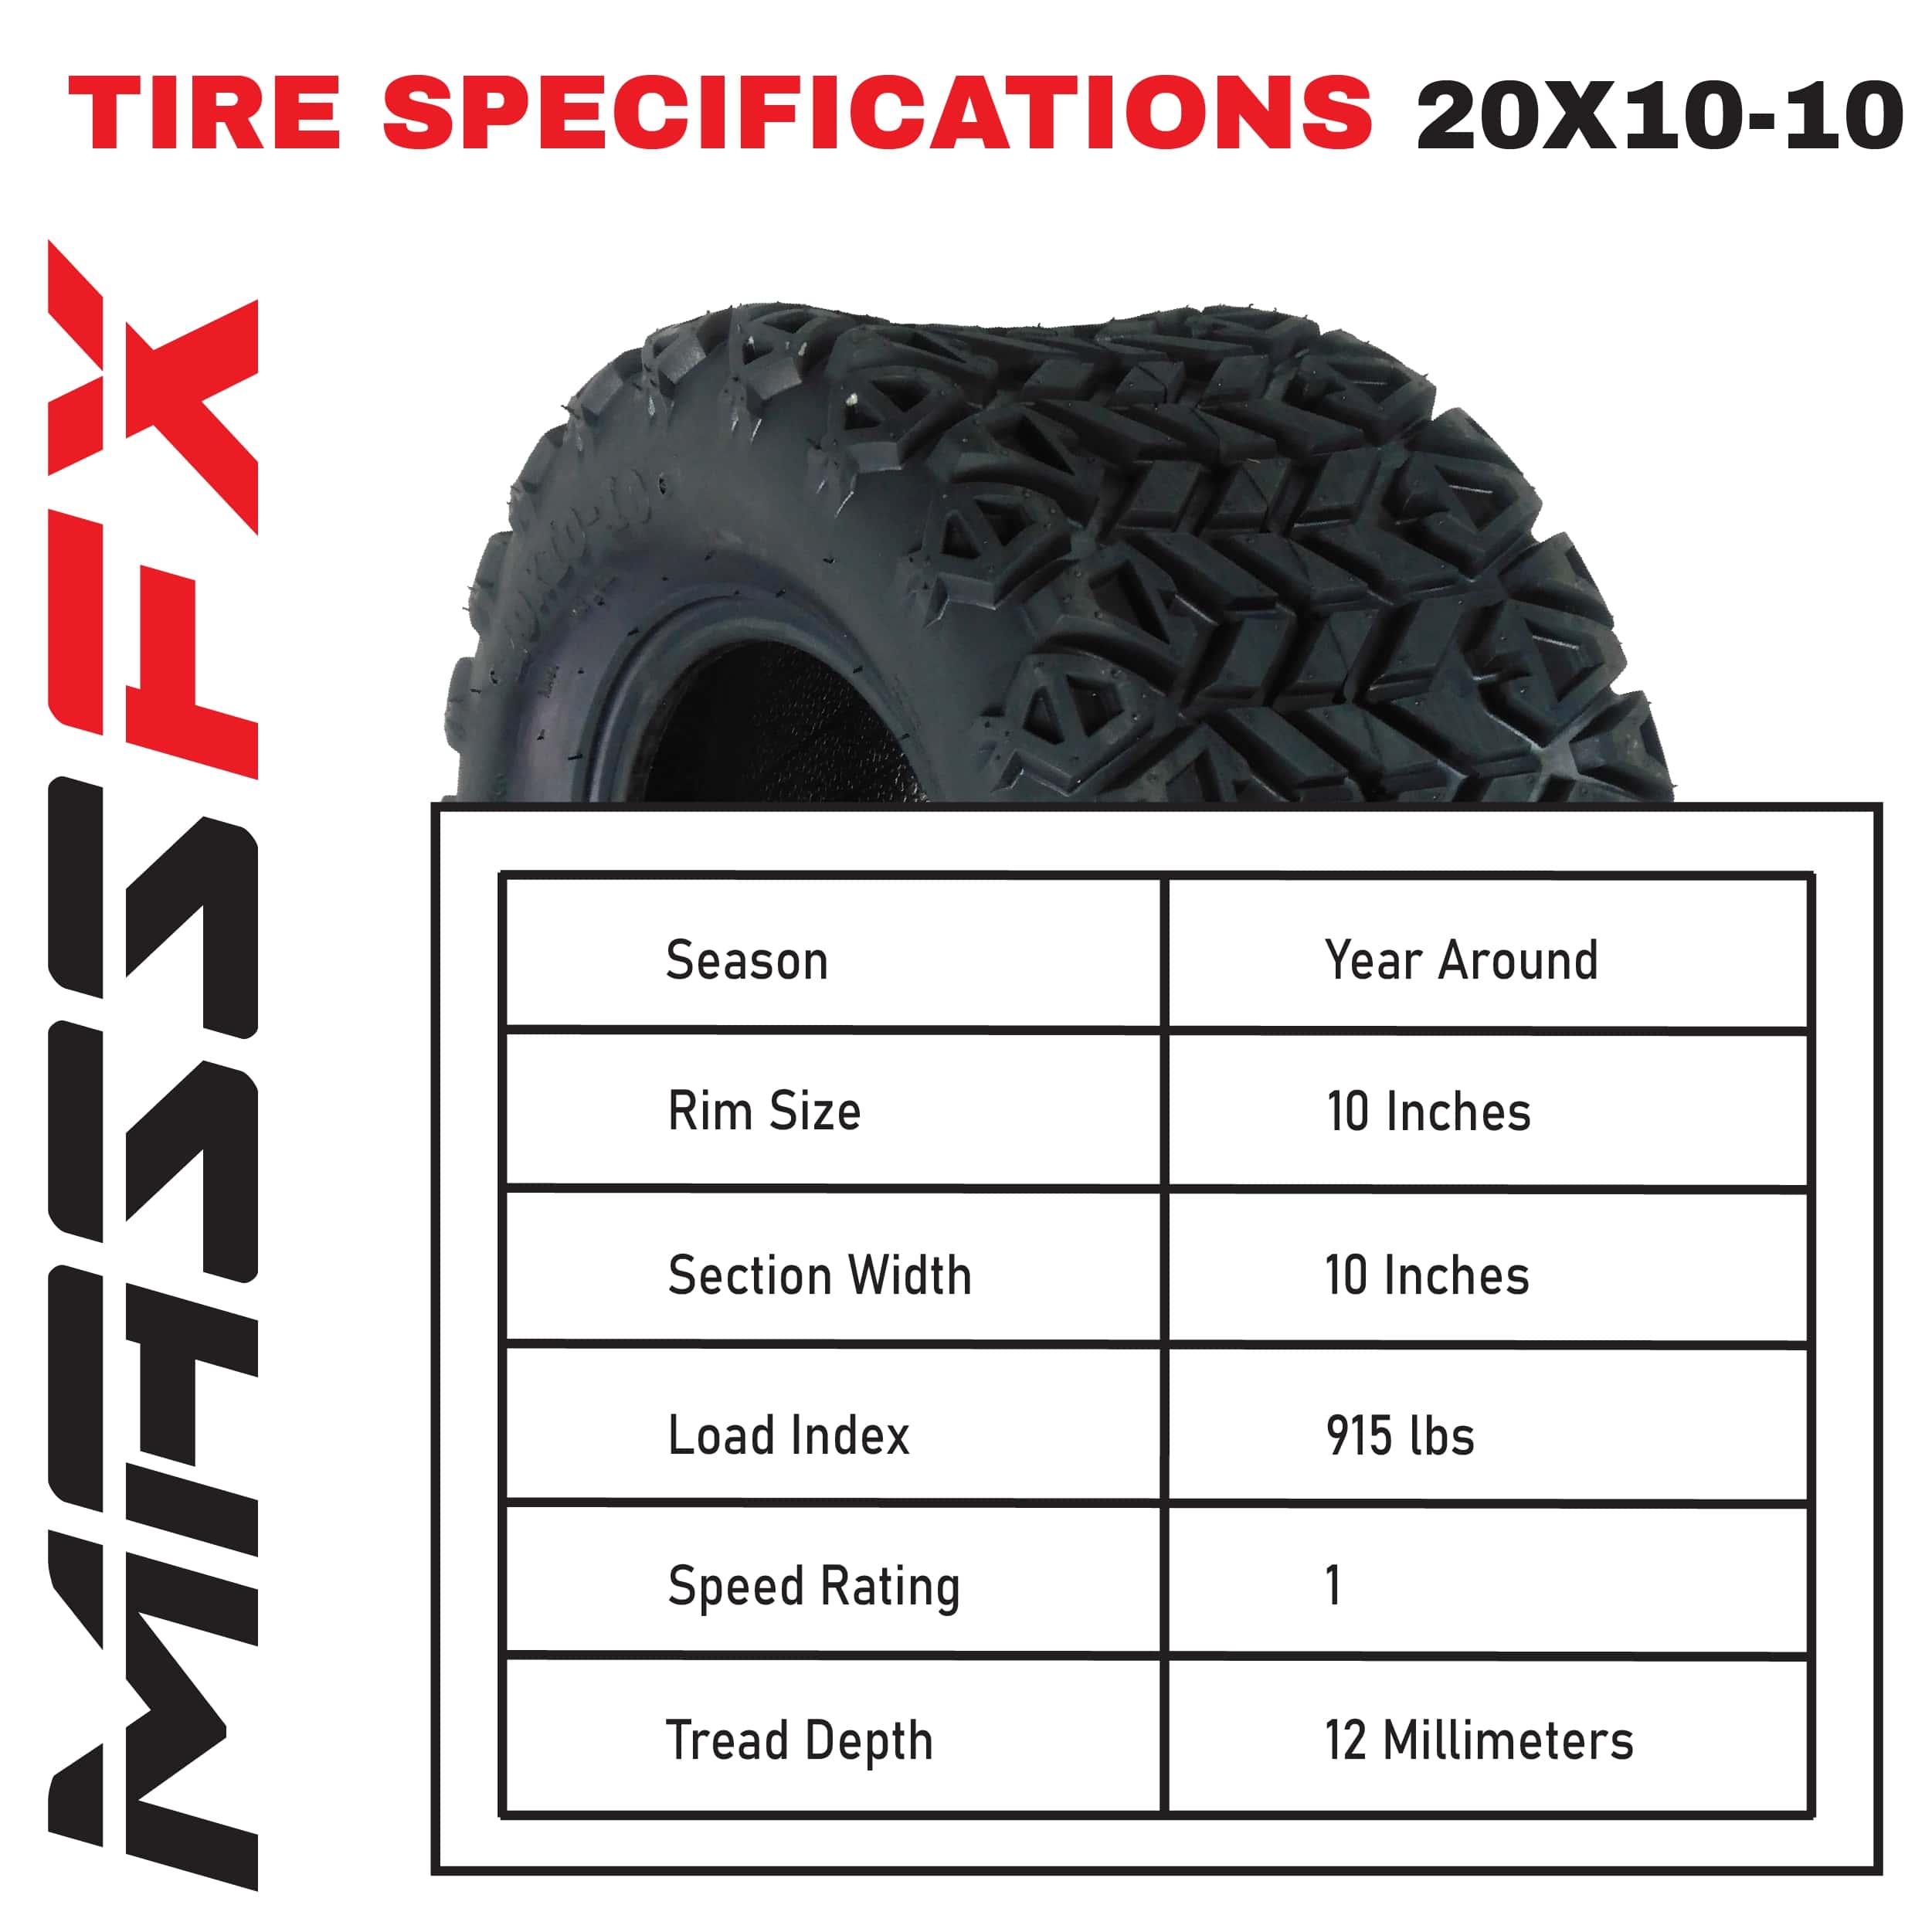 MASSFX SL201010(x4) 4 PLY Golf Cart Turf Tires 20x10-10, Set of four (4) Tires